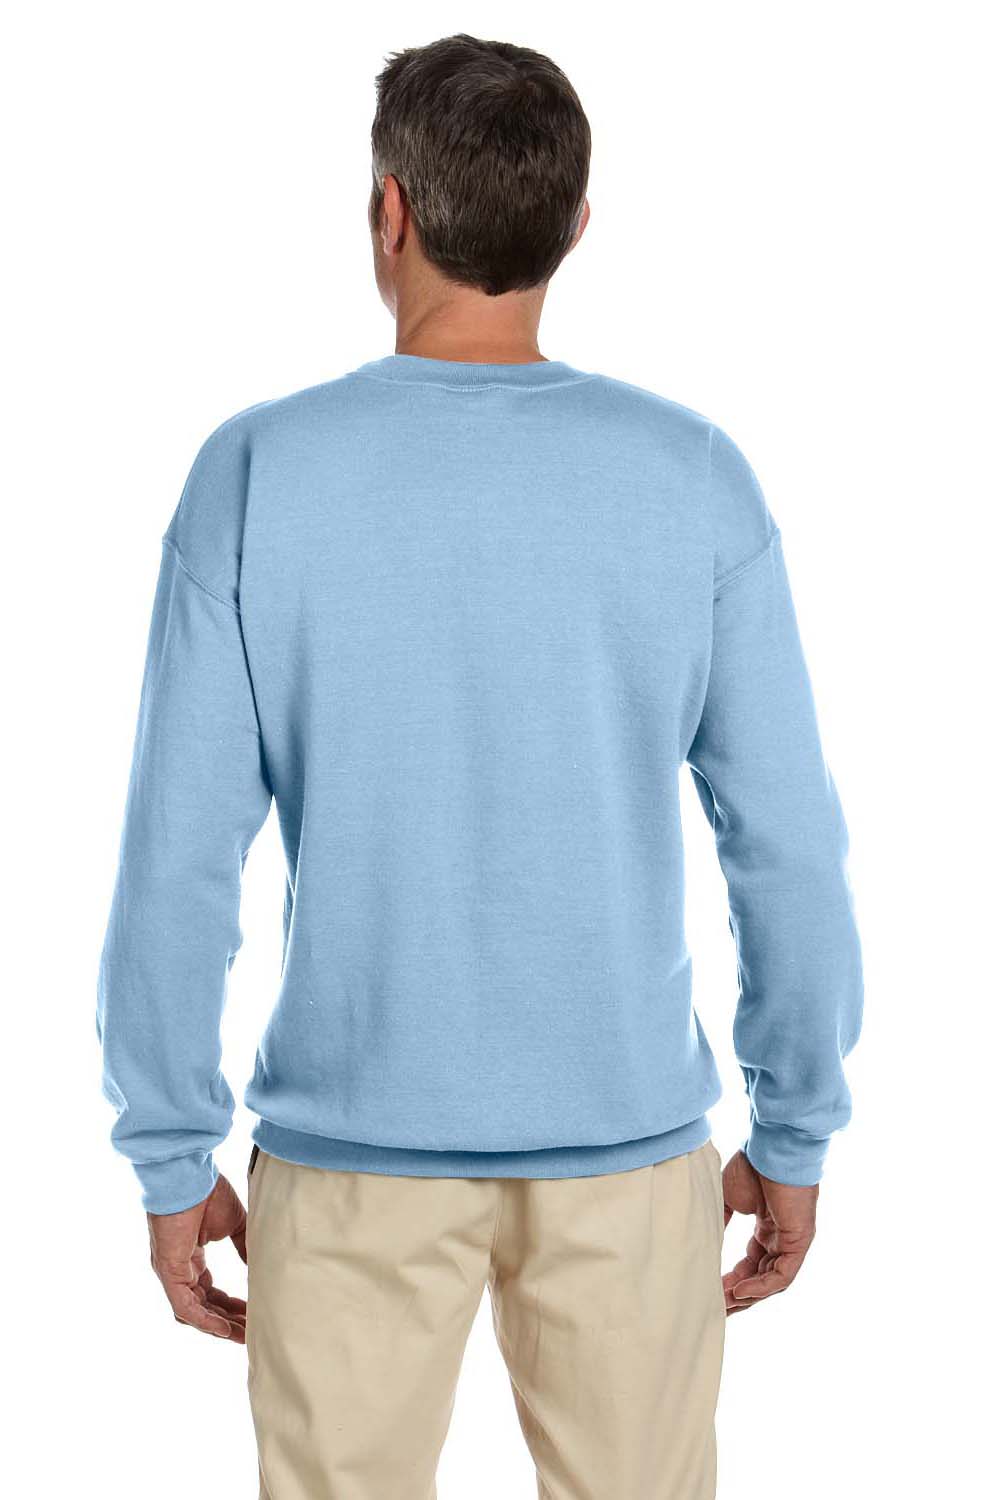 Gildan G180 Mens Fleece Crewneck Sweatshirt Light Blue Back